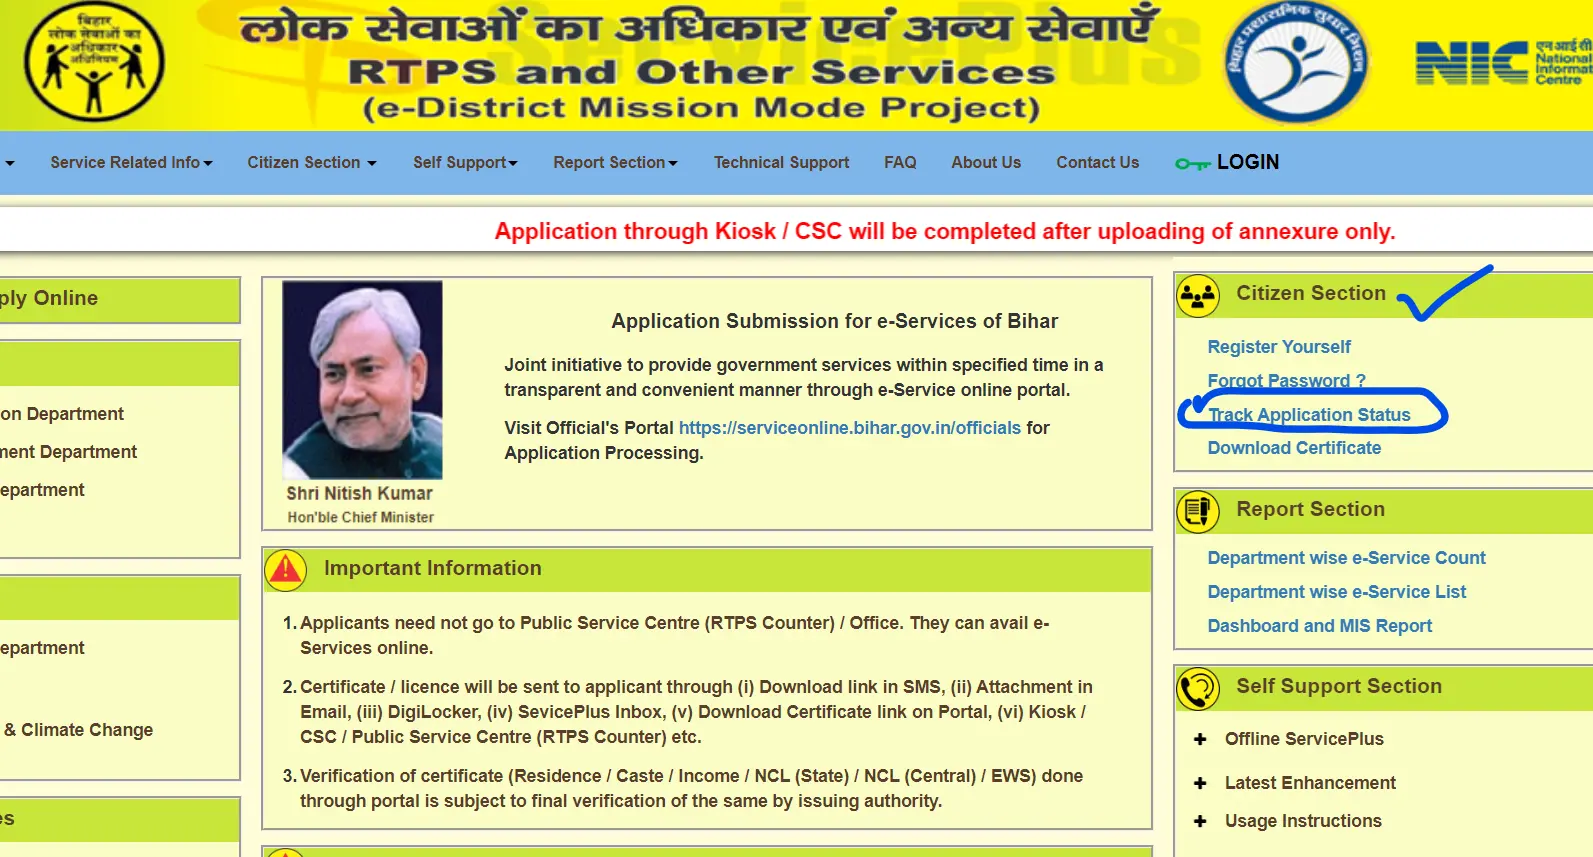 How to Check RTPS Bihar Application Status Online, Via SMS